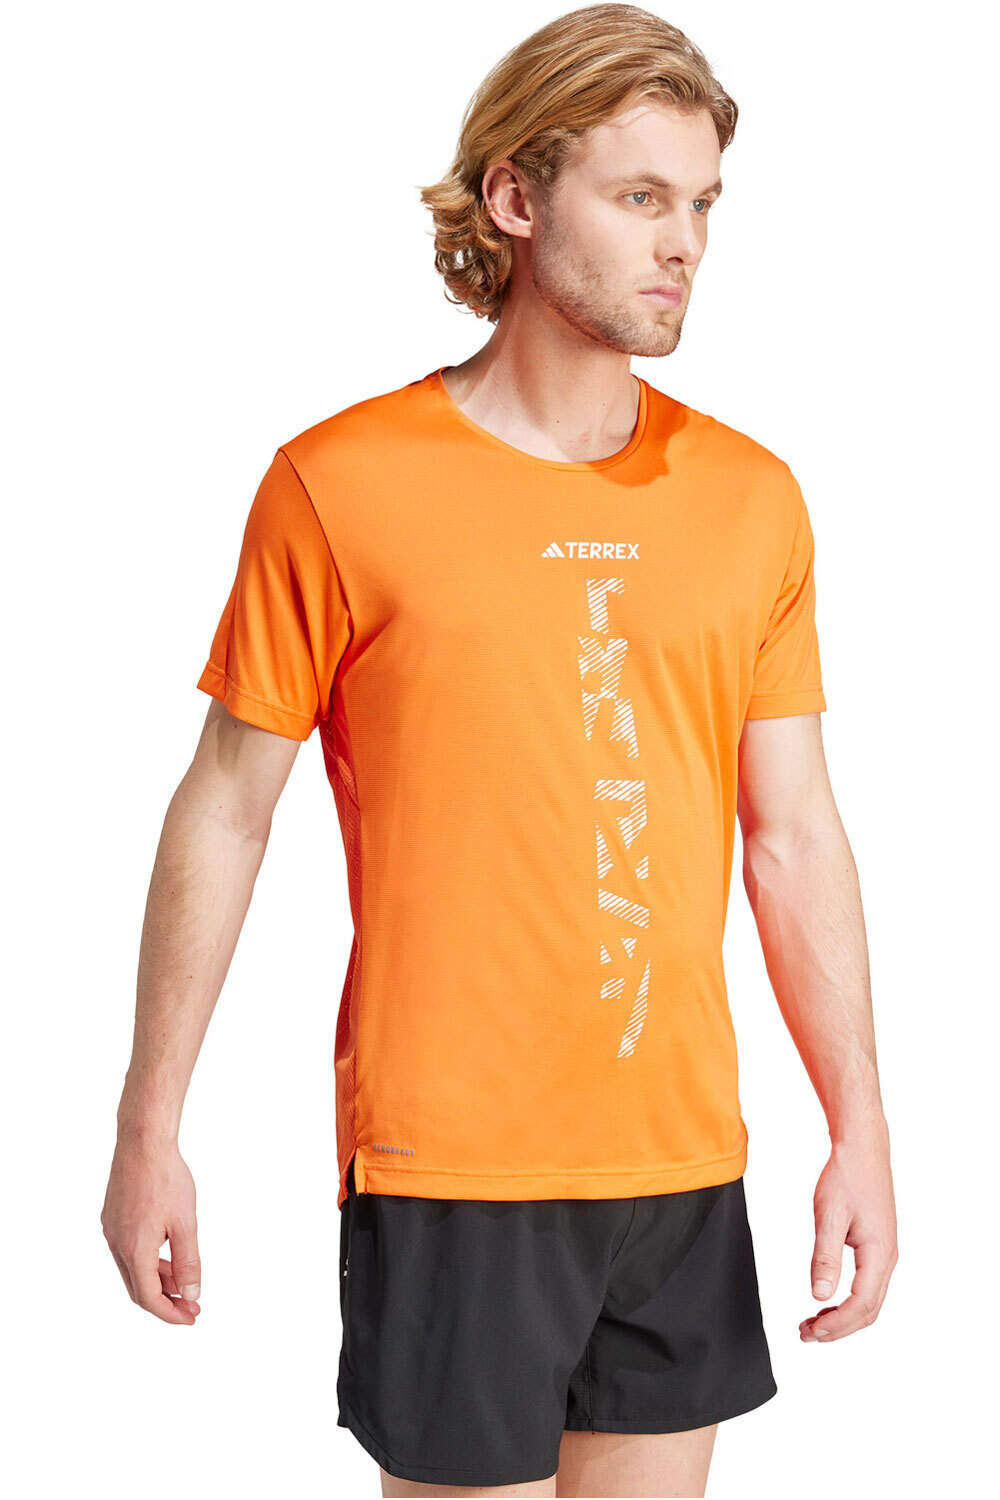 adidas camisetas trail running manga corta hombre AGR SHIRT vista detalle